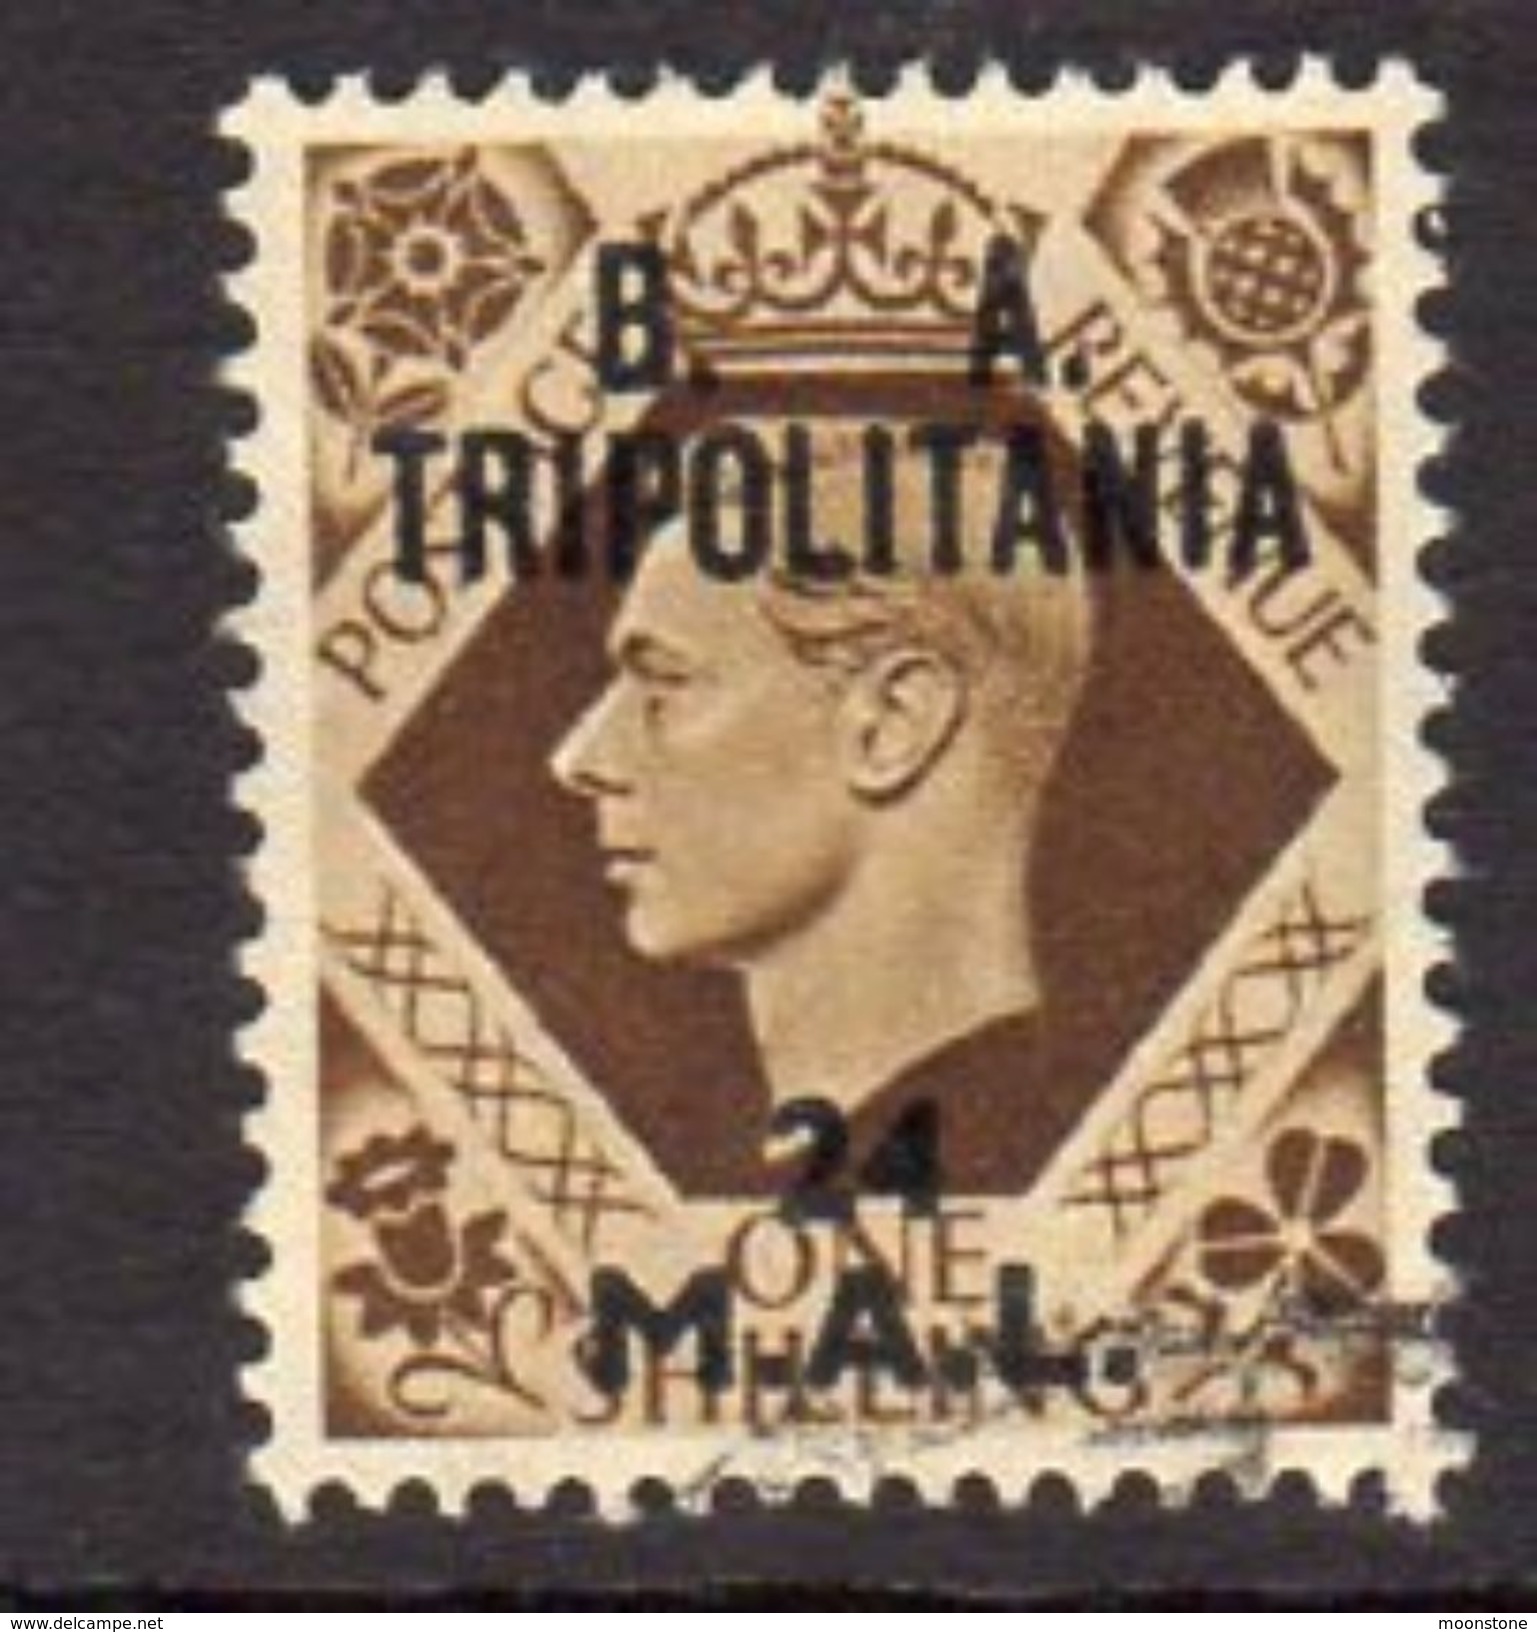 BOIC, BA Tripolitania 1950 24l. On 1/- Overprint On GB, Used, SG T23 (A) - Tripolitania